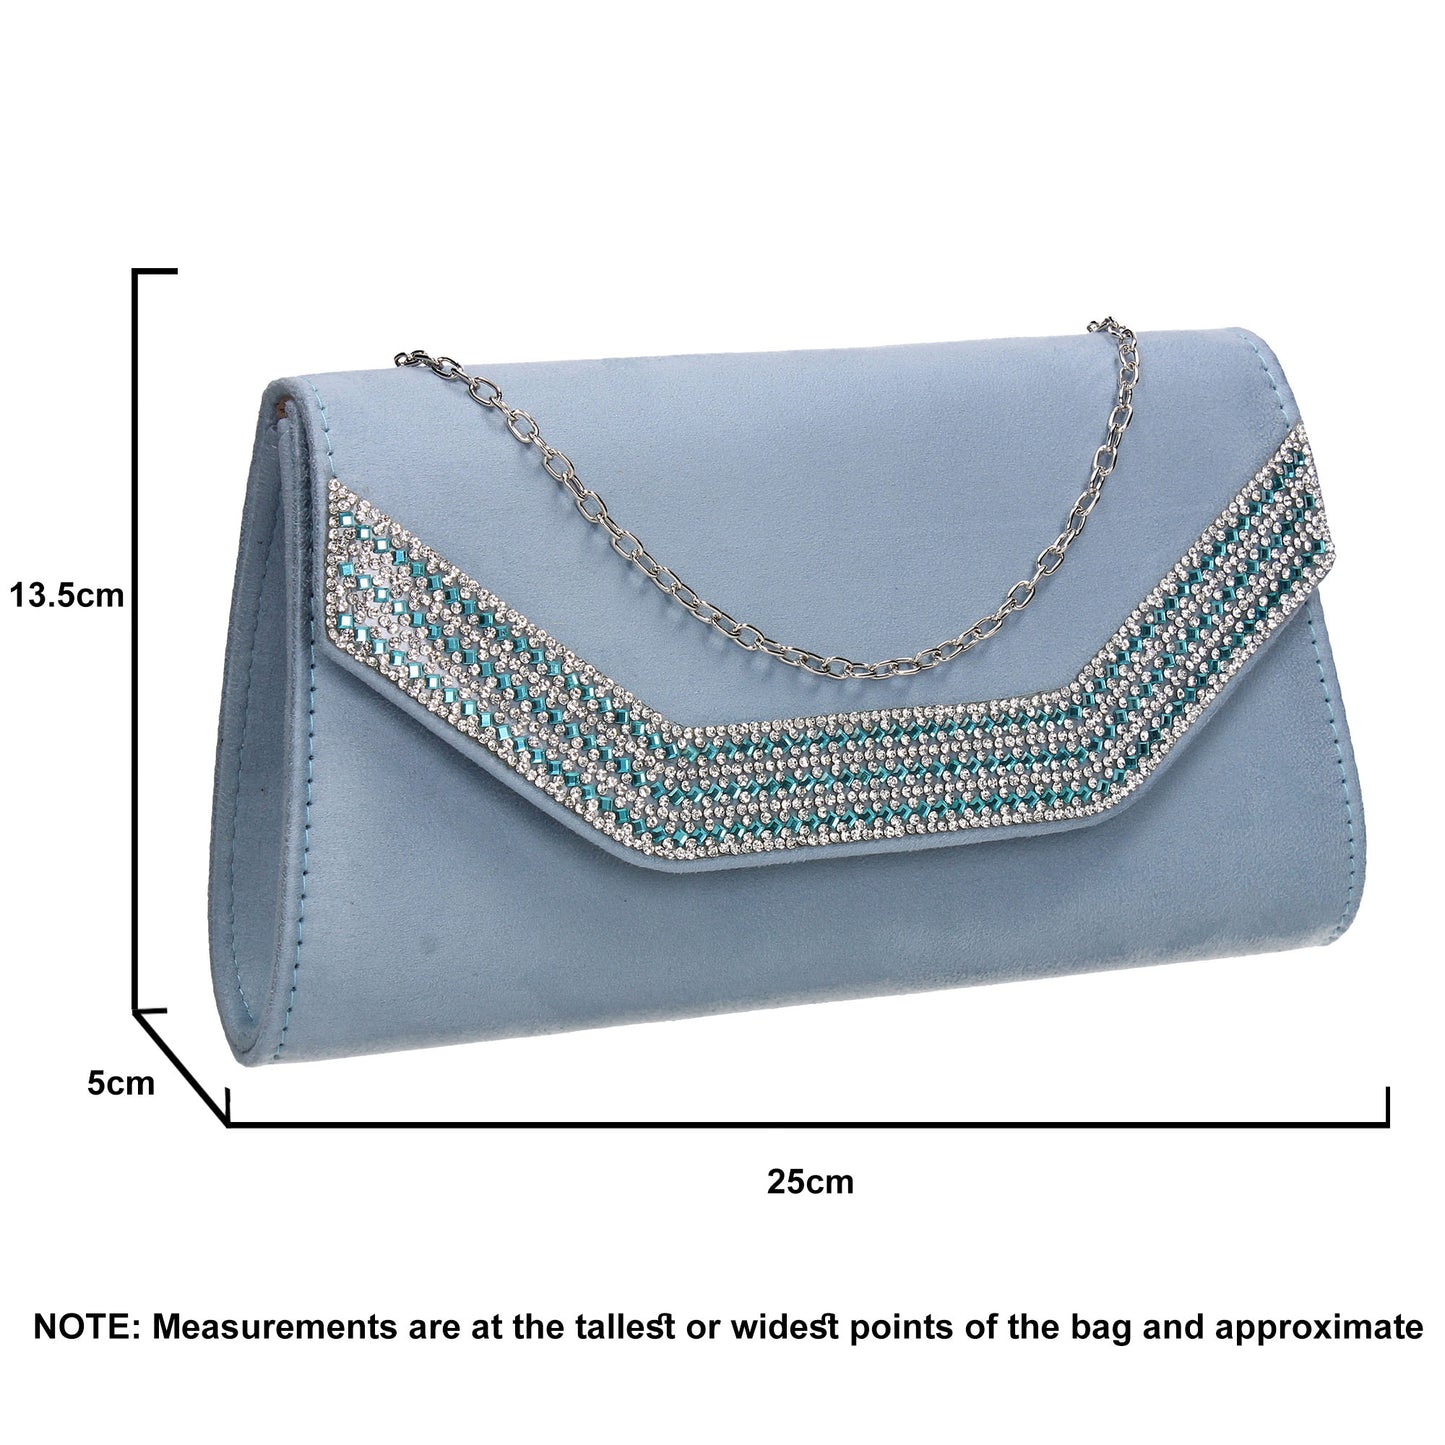 SWANKYSWANS Harper Clutch Bag Serenity Blue Cute Cheap Clutch Bag For Weddings School and Work